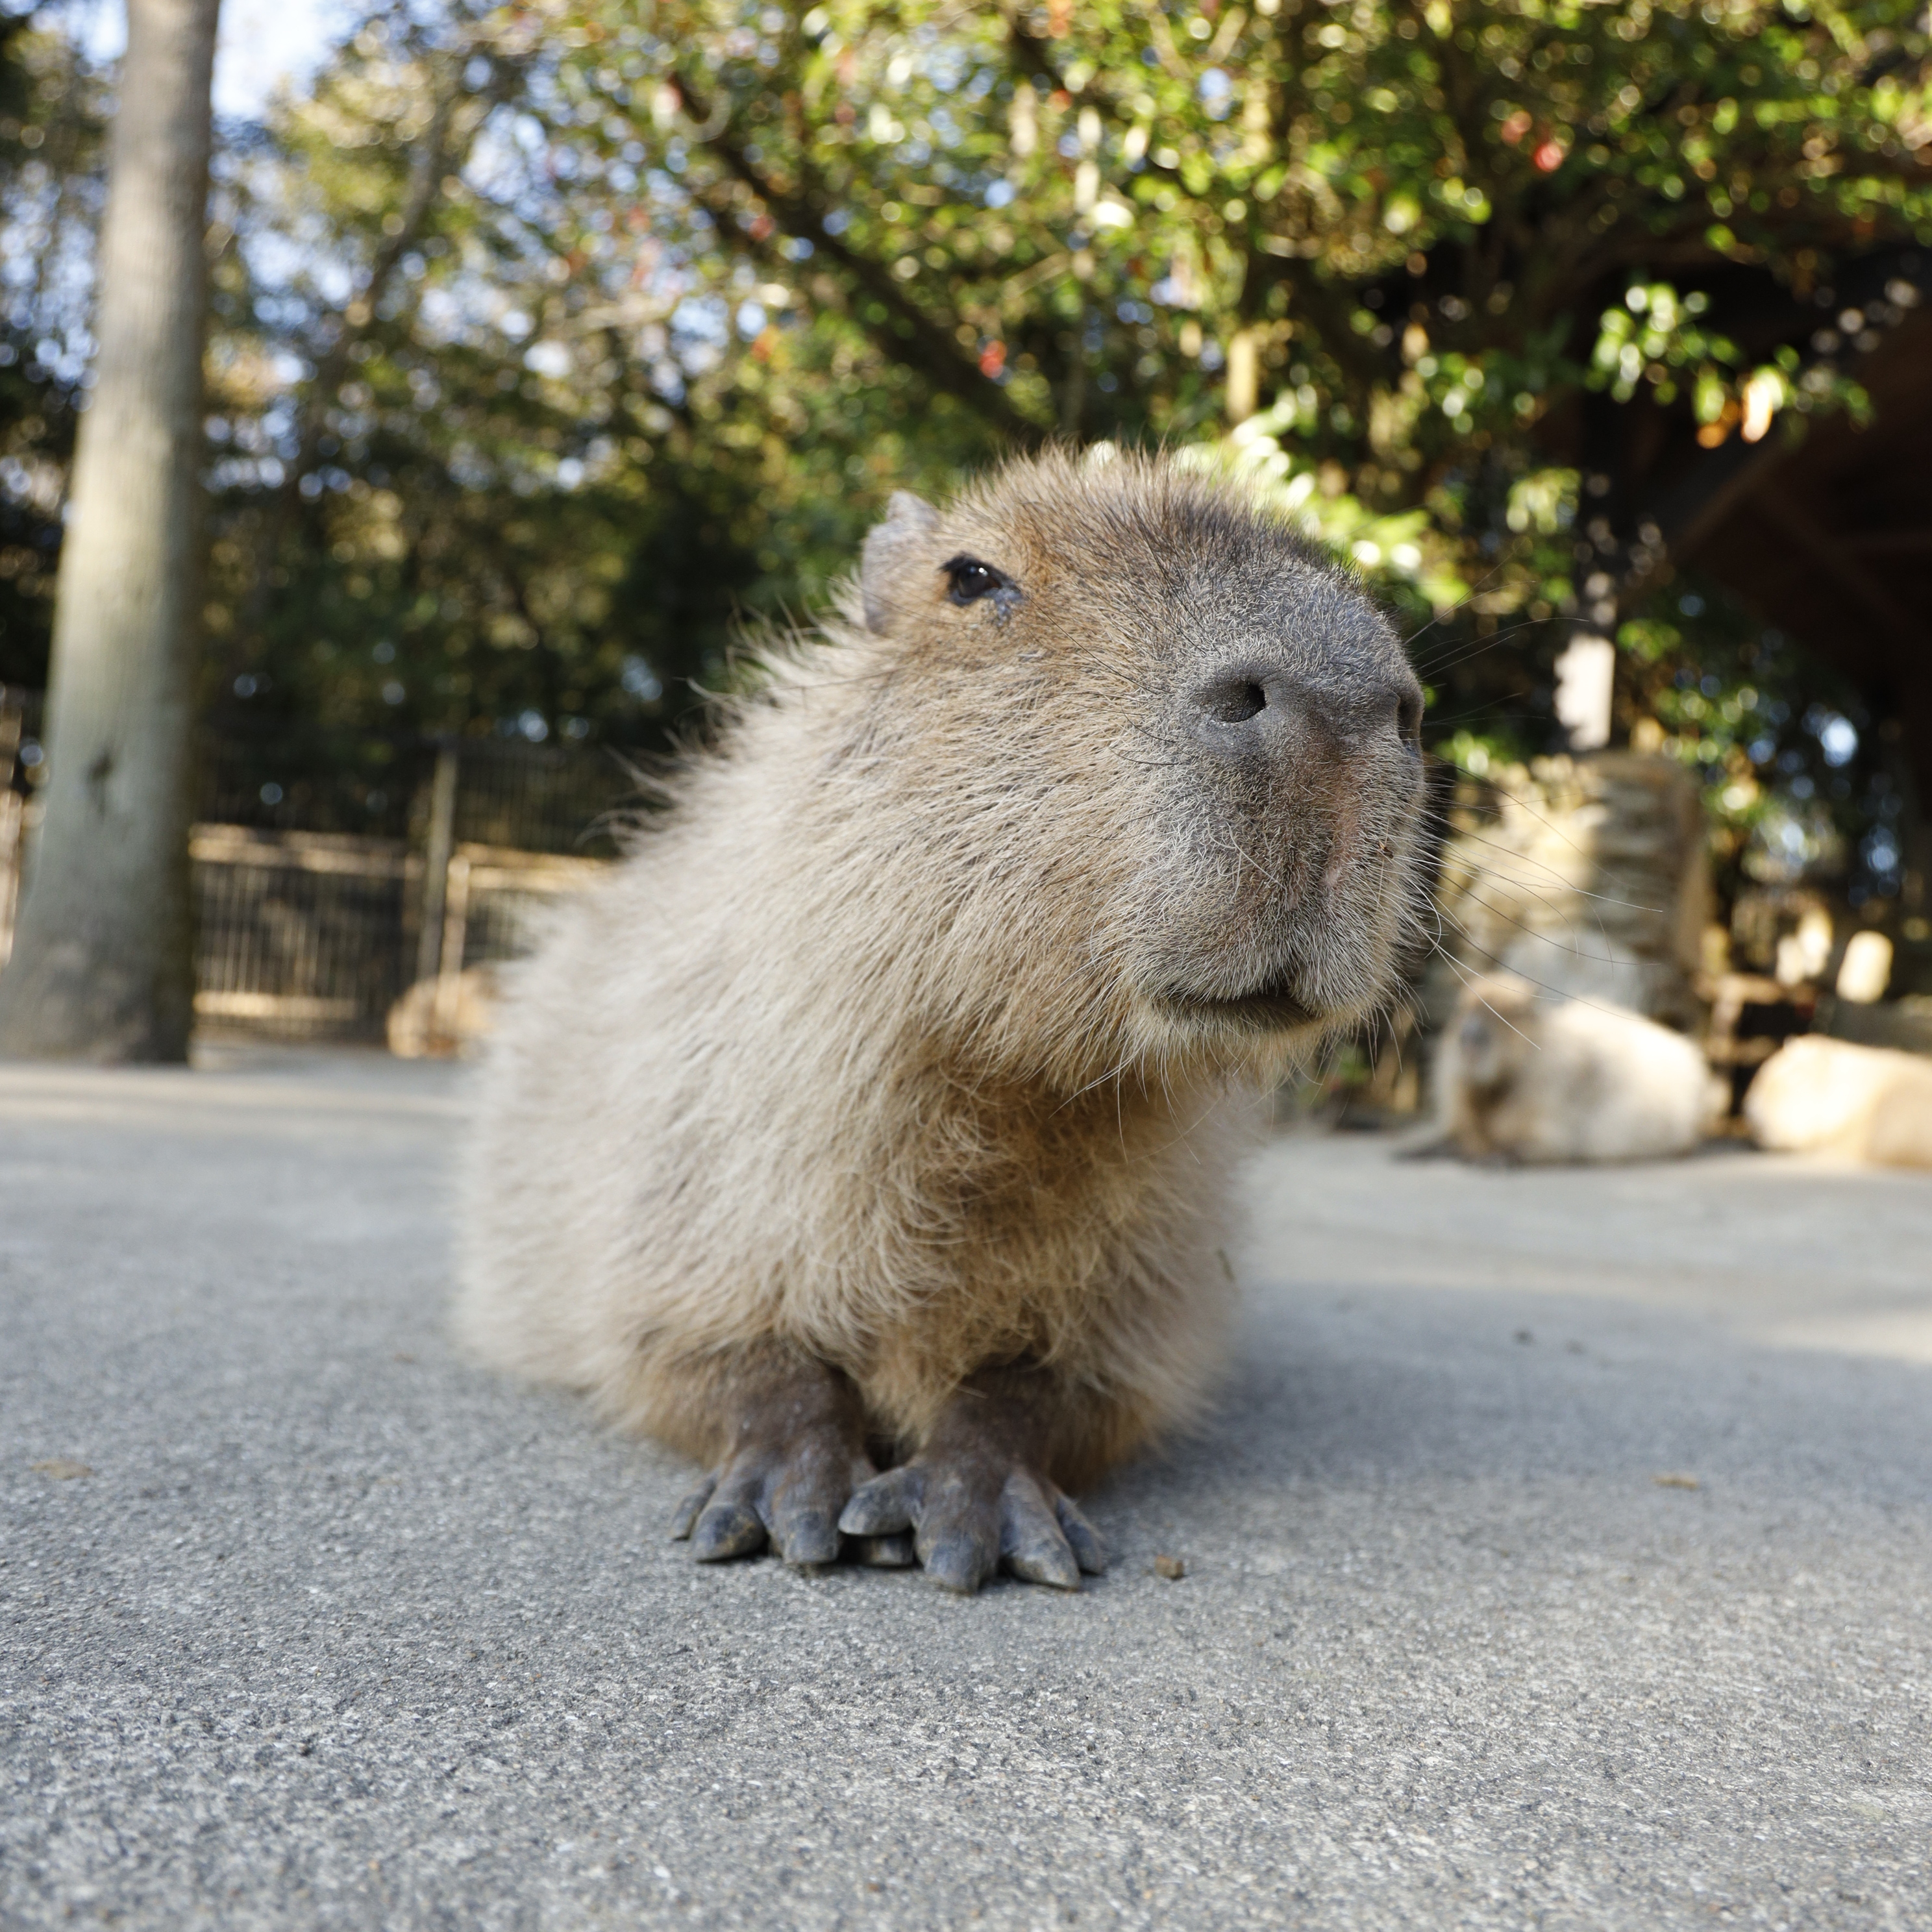 Capybara Word of the Day (@capywordoftheday) • Instagram photos and videos